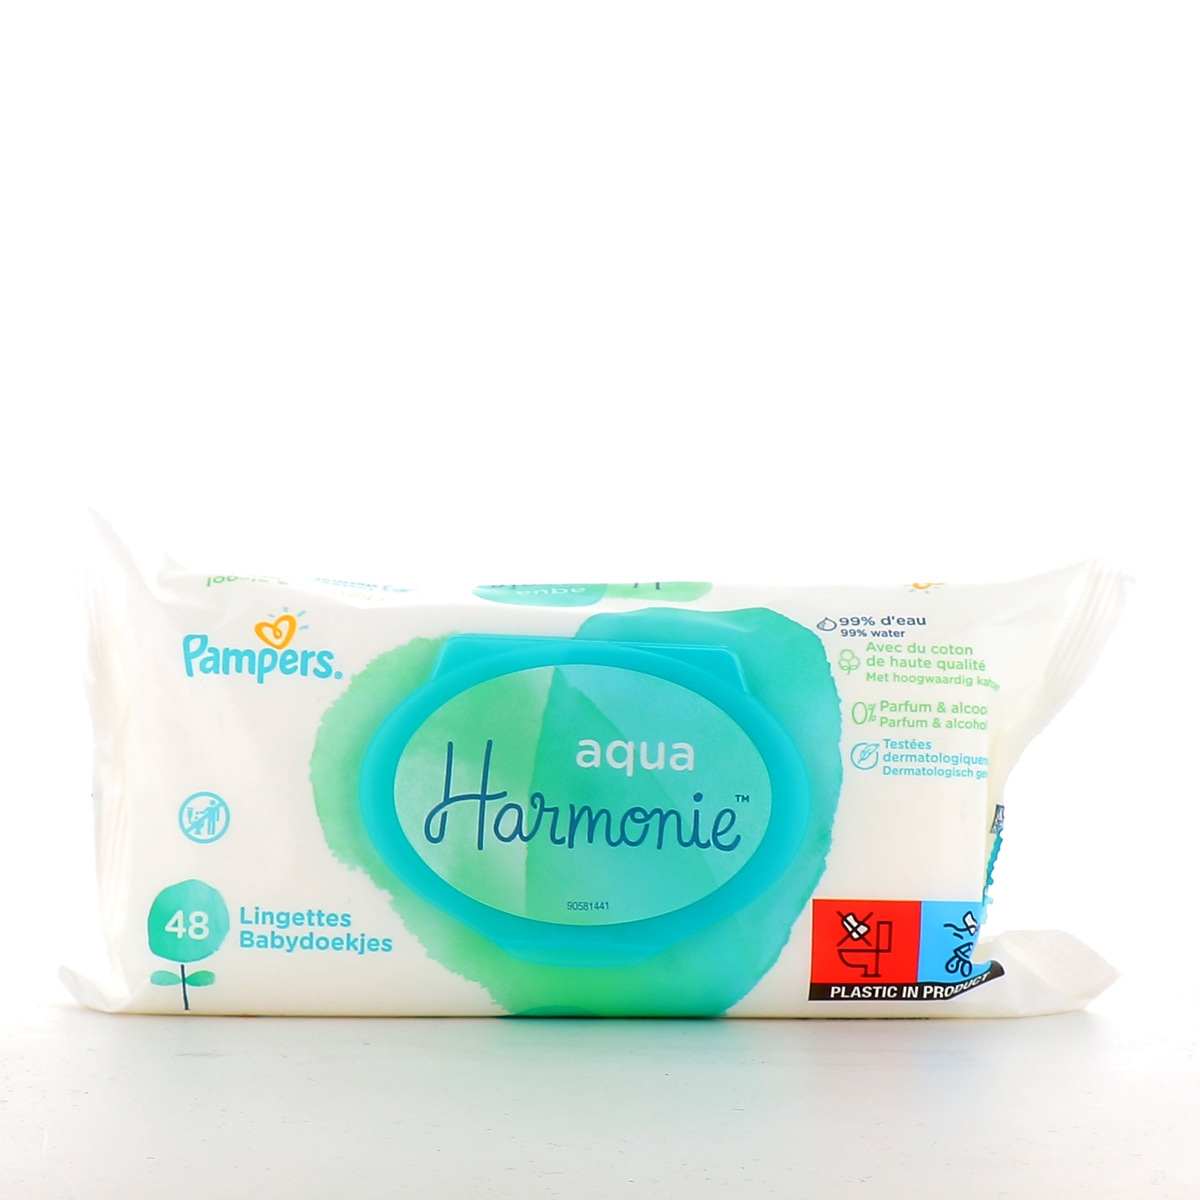 Pampers Aqua Harmonie Lingette Imprégnée x 48 en vente en pharmacie